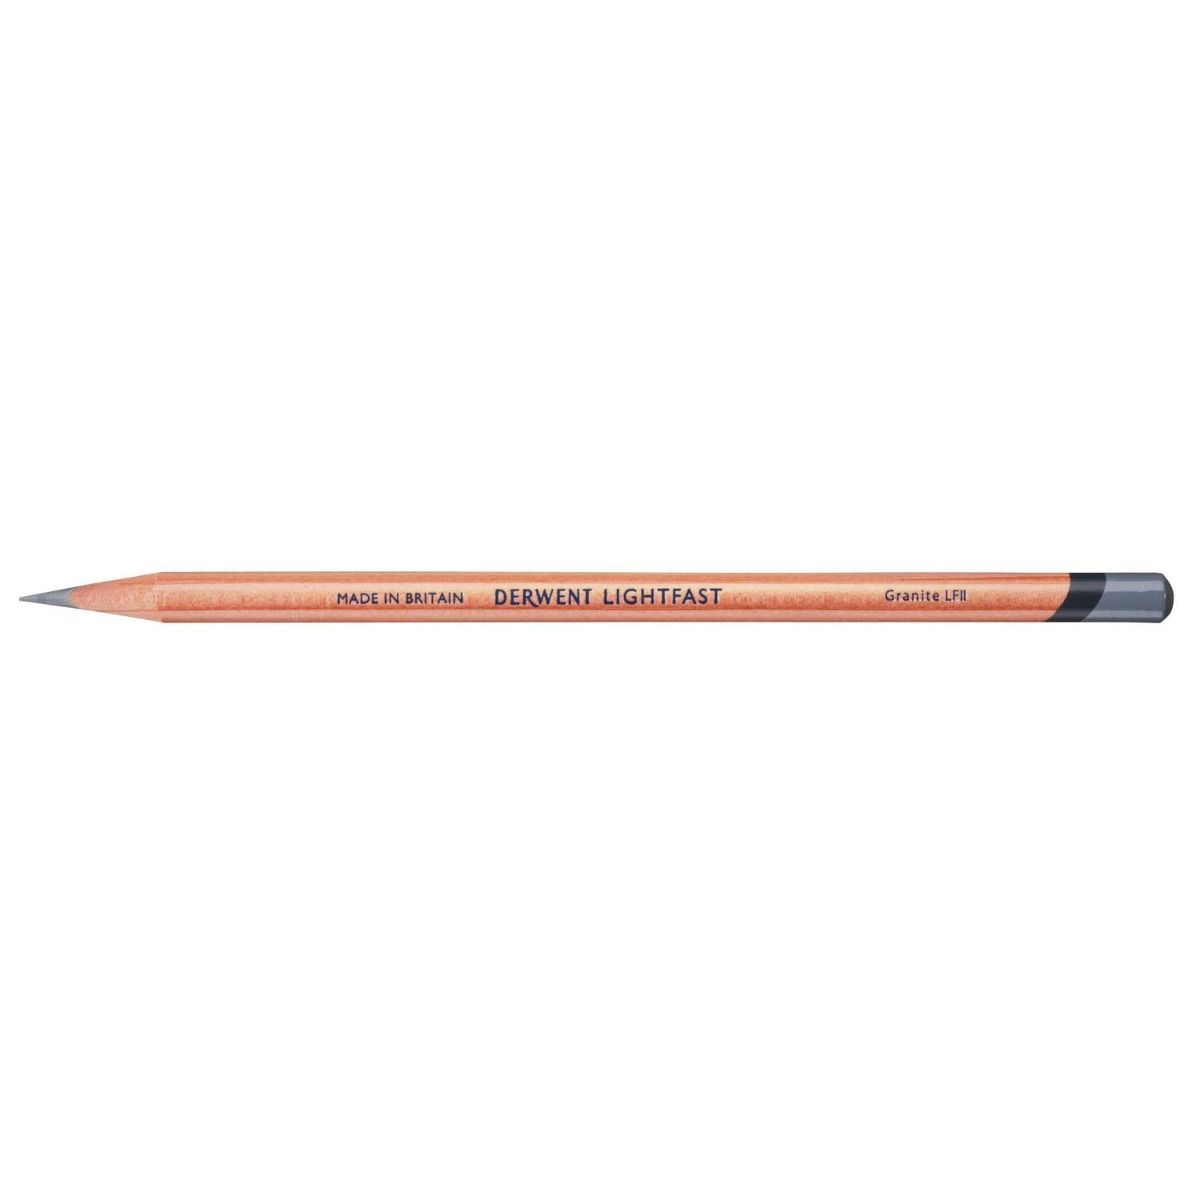 Derwent Lightfast Pencil Colour: Granite